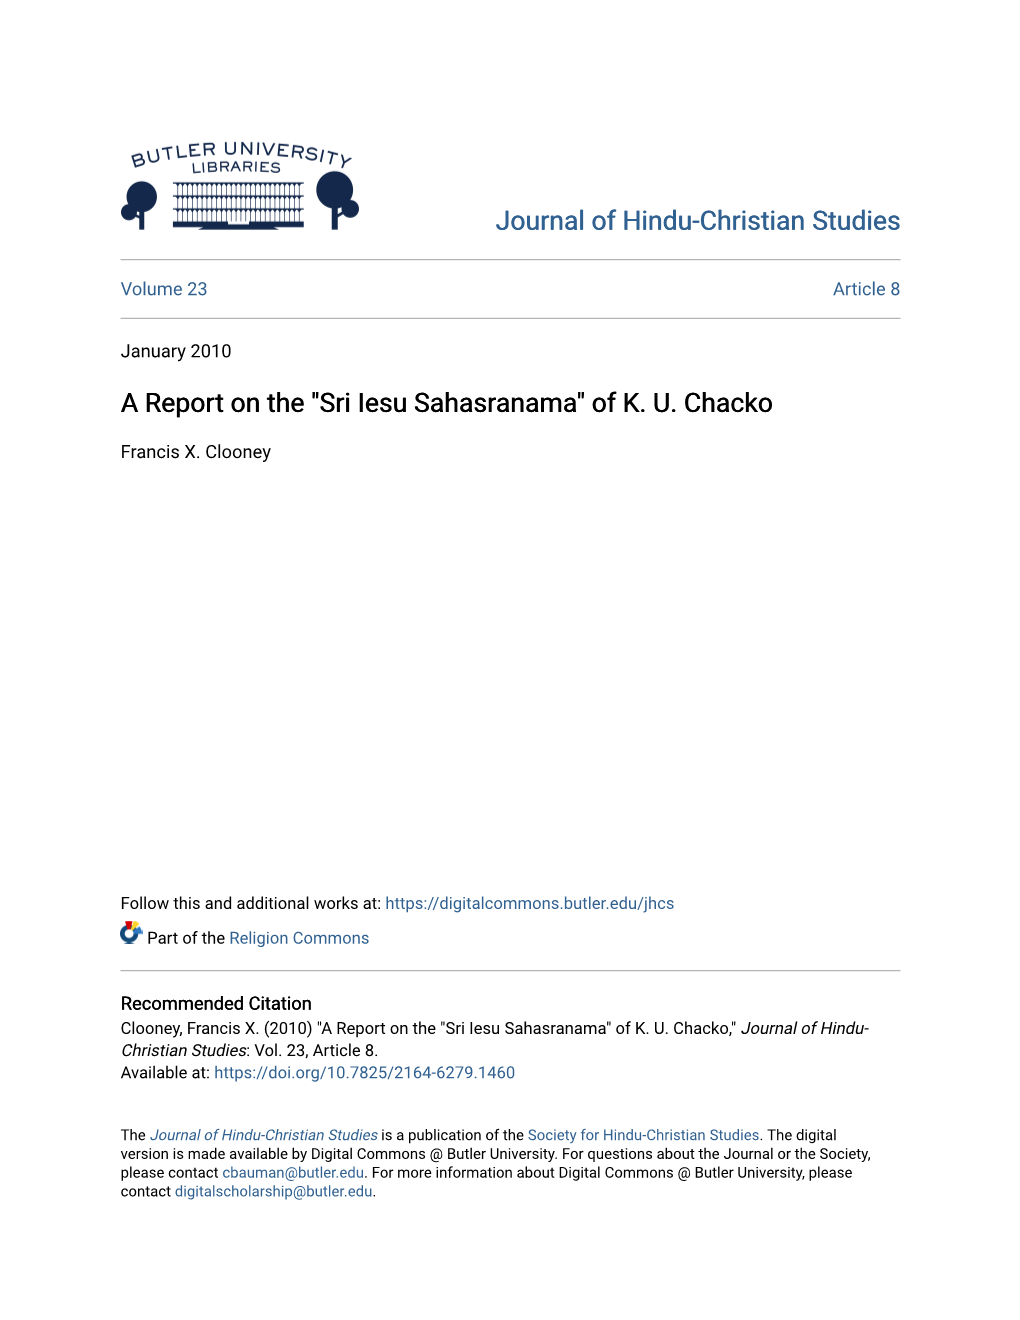 A Report on the "Sri Iesu Sahasranama" of K. U. Chacko